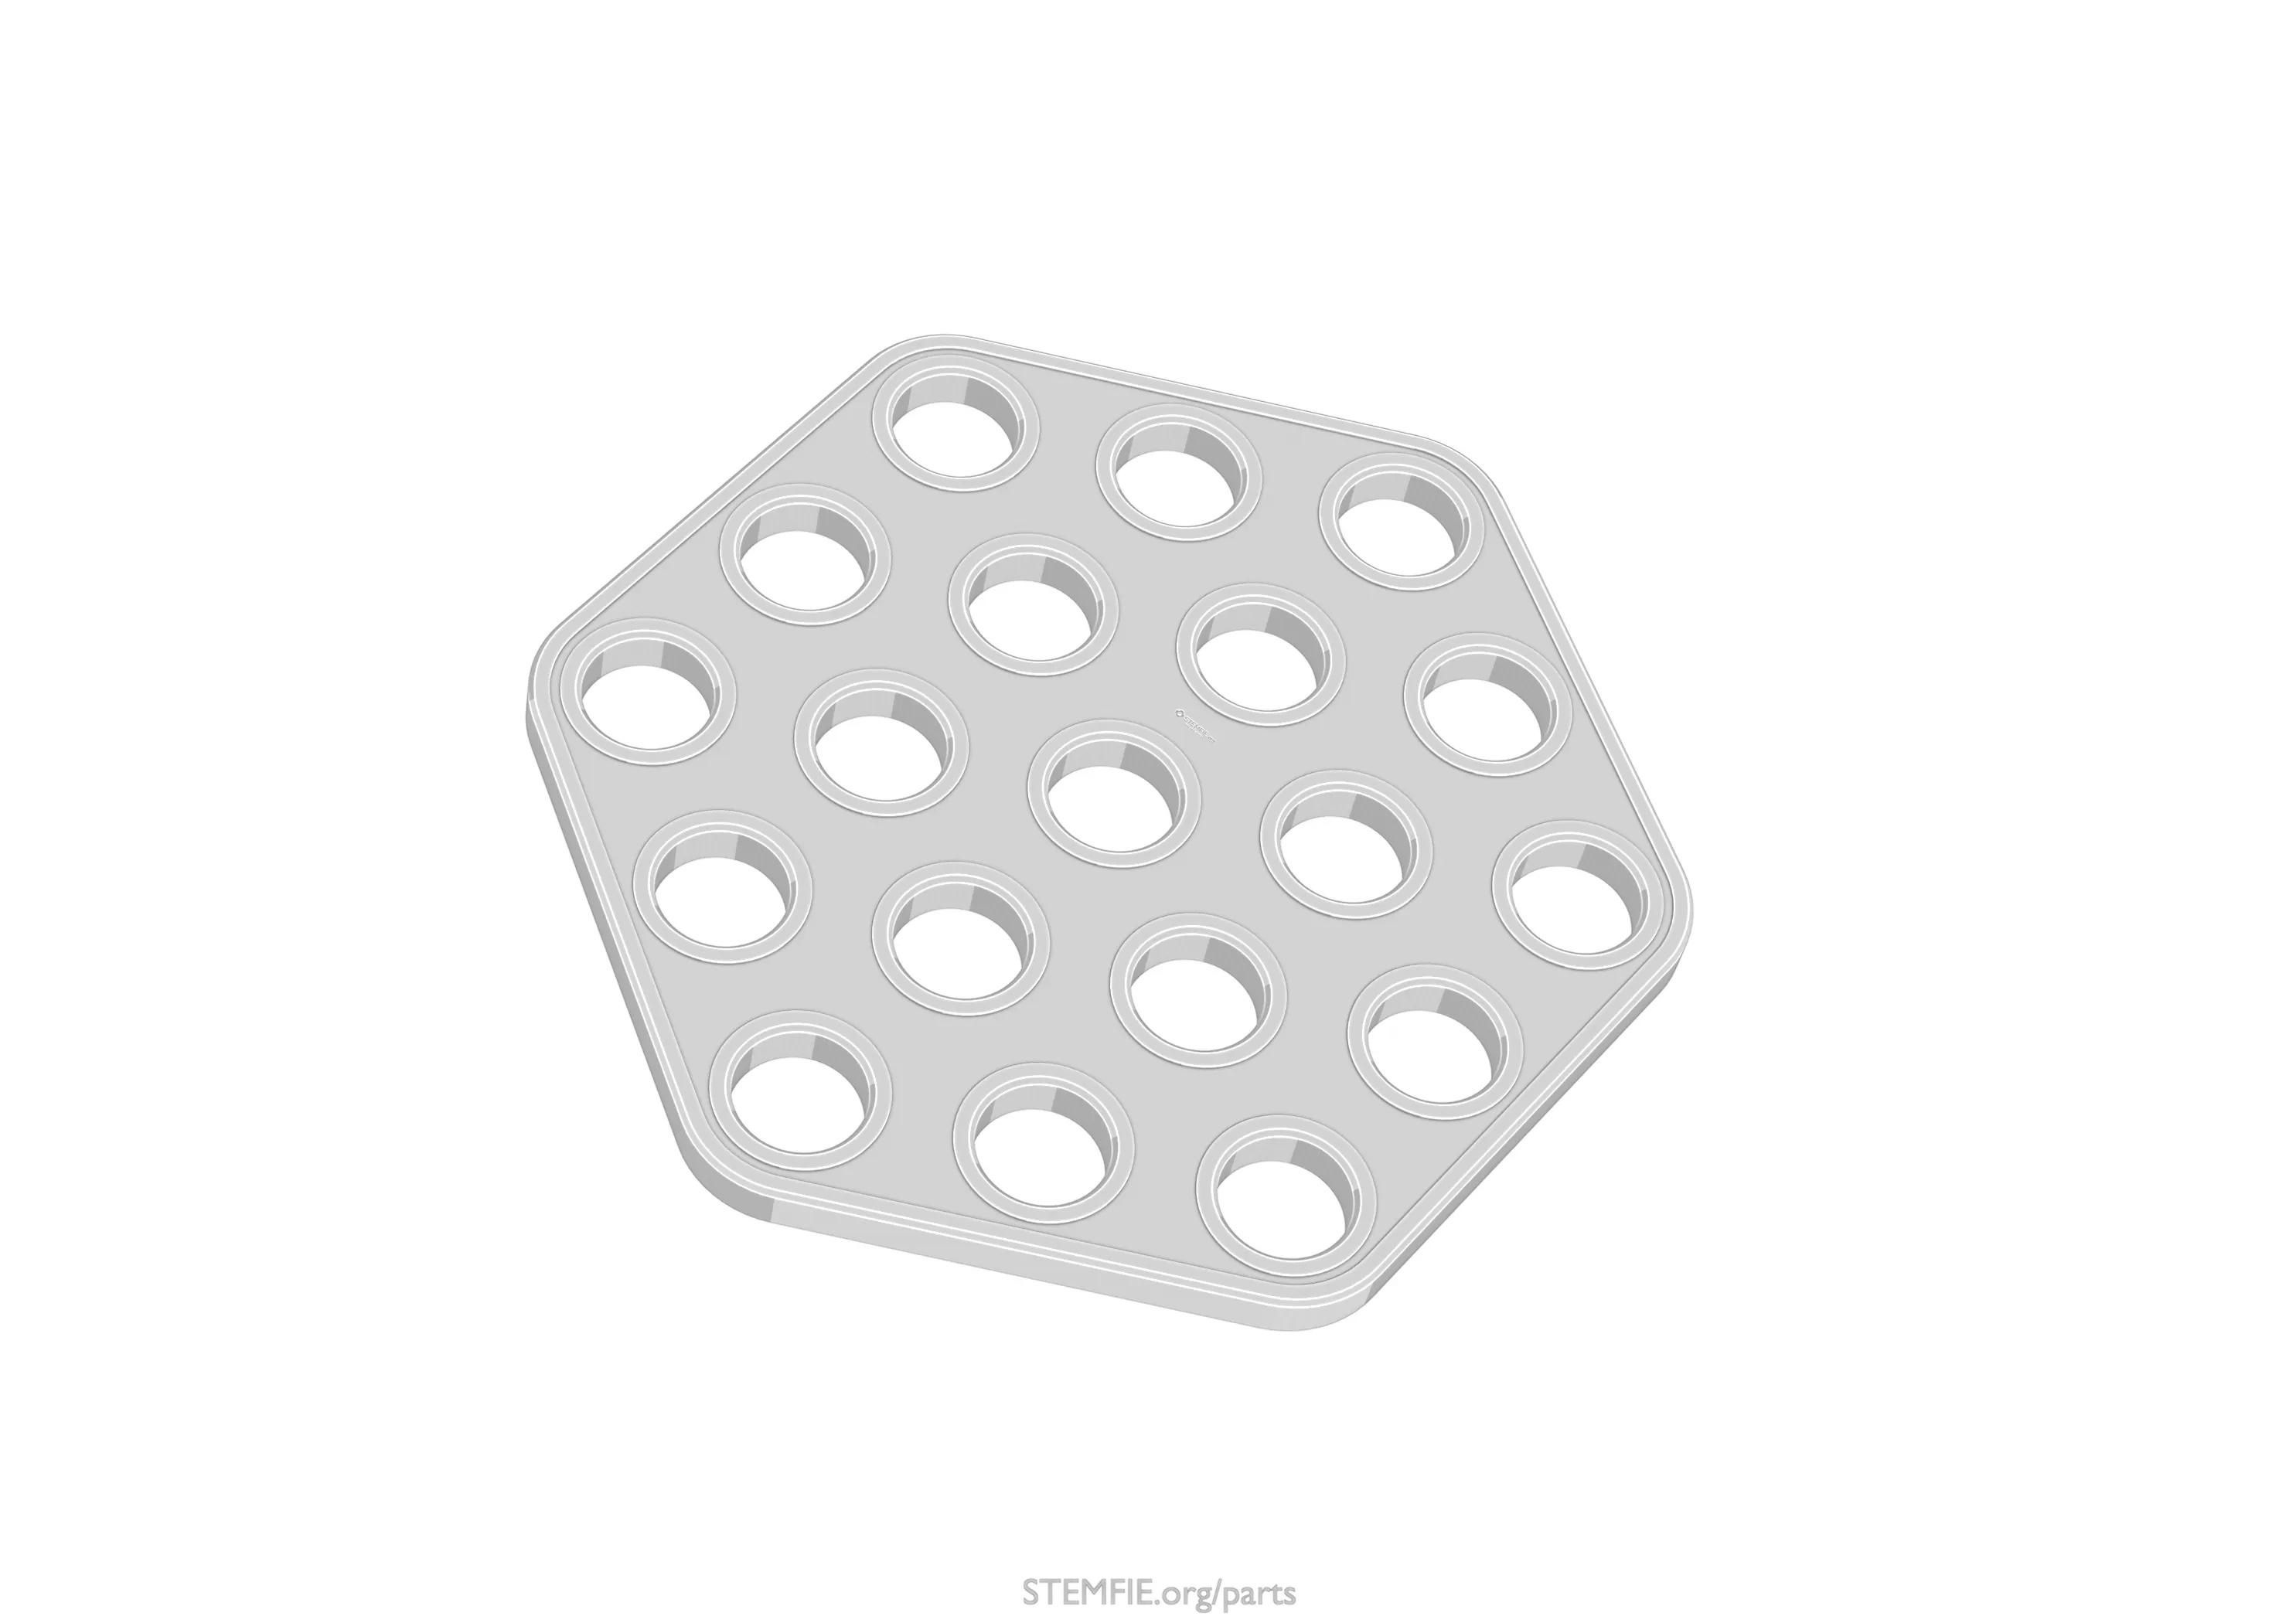 STEMFIE - Parts - Plates - 6-Hexagonal 3d model